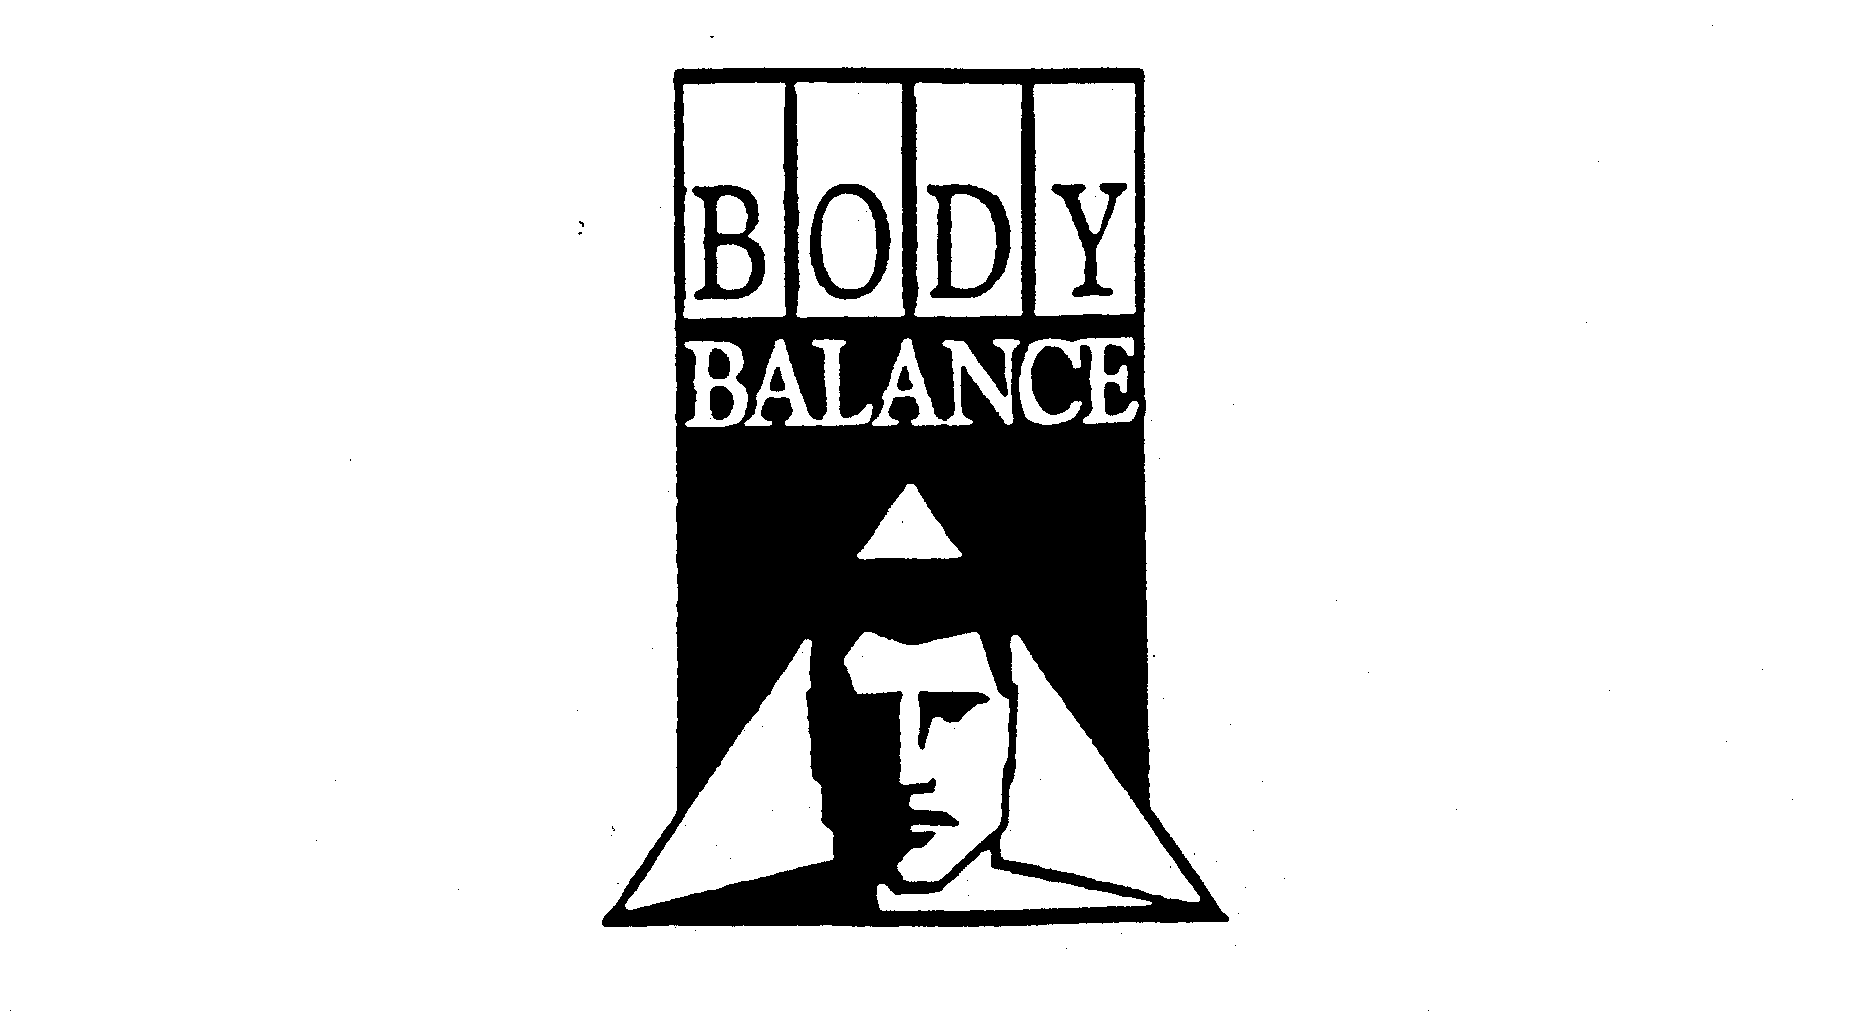 BODY BALANCE